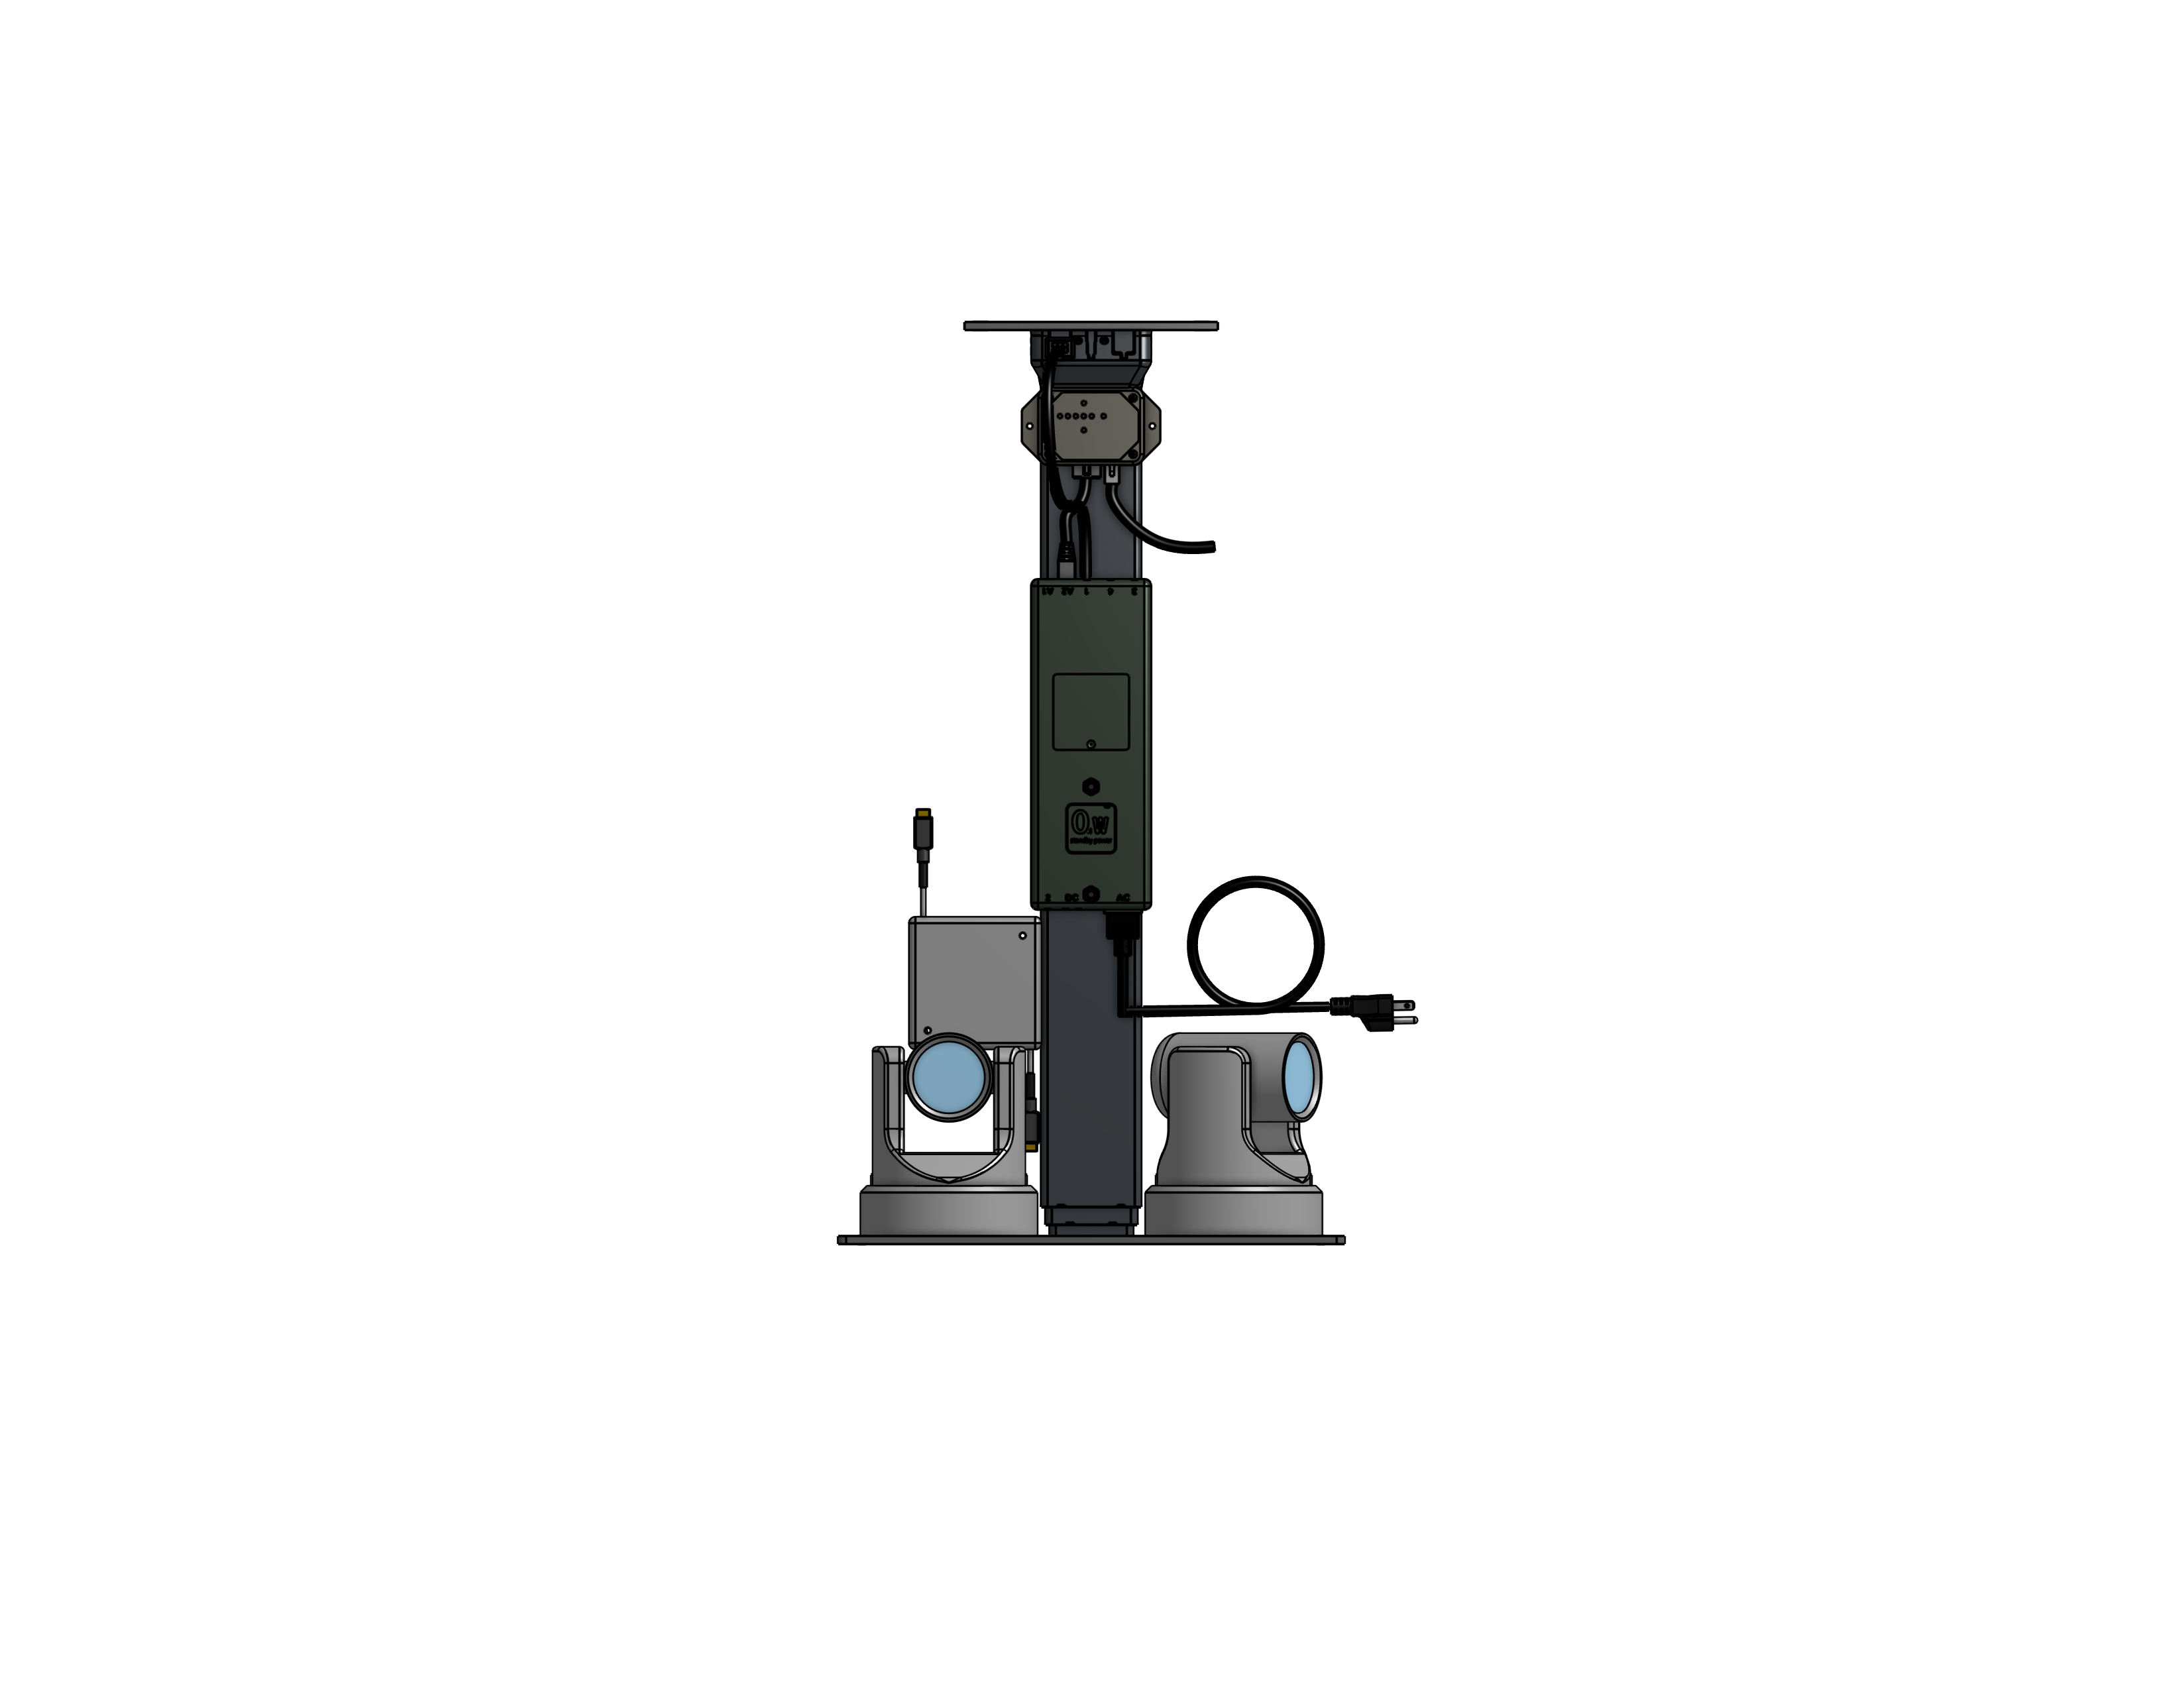 Dual PTZ Camera Lift - Ceiling Mounted  - Travel: 38 Inches - Model DAPTZ-30-38